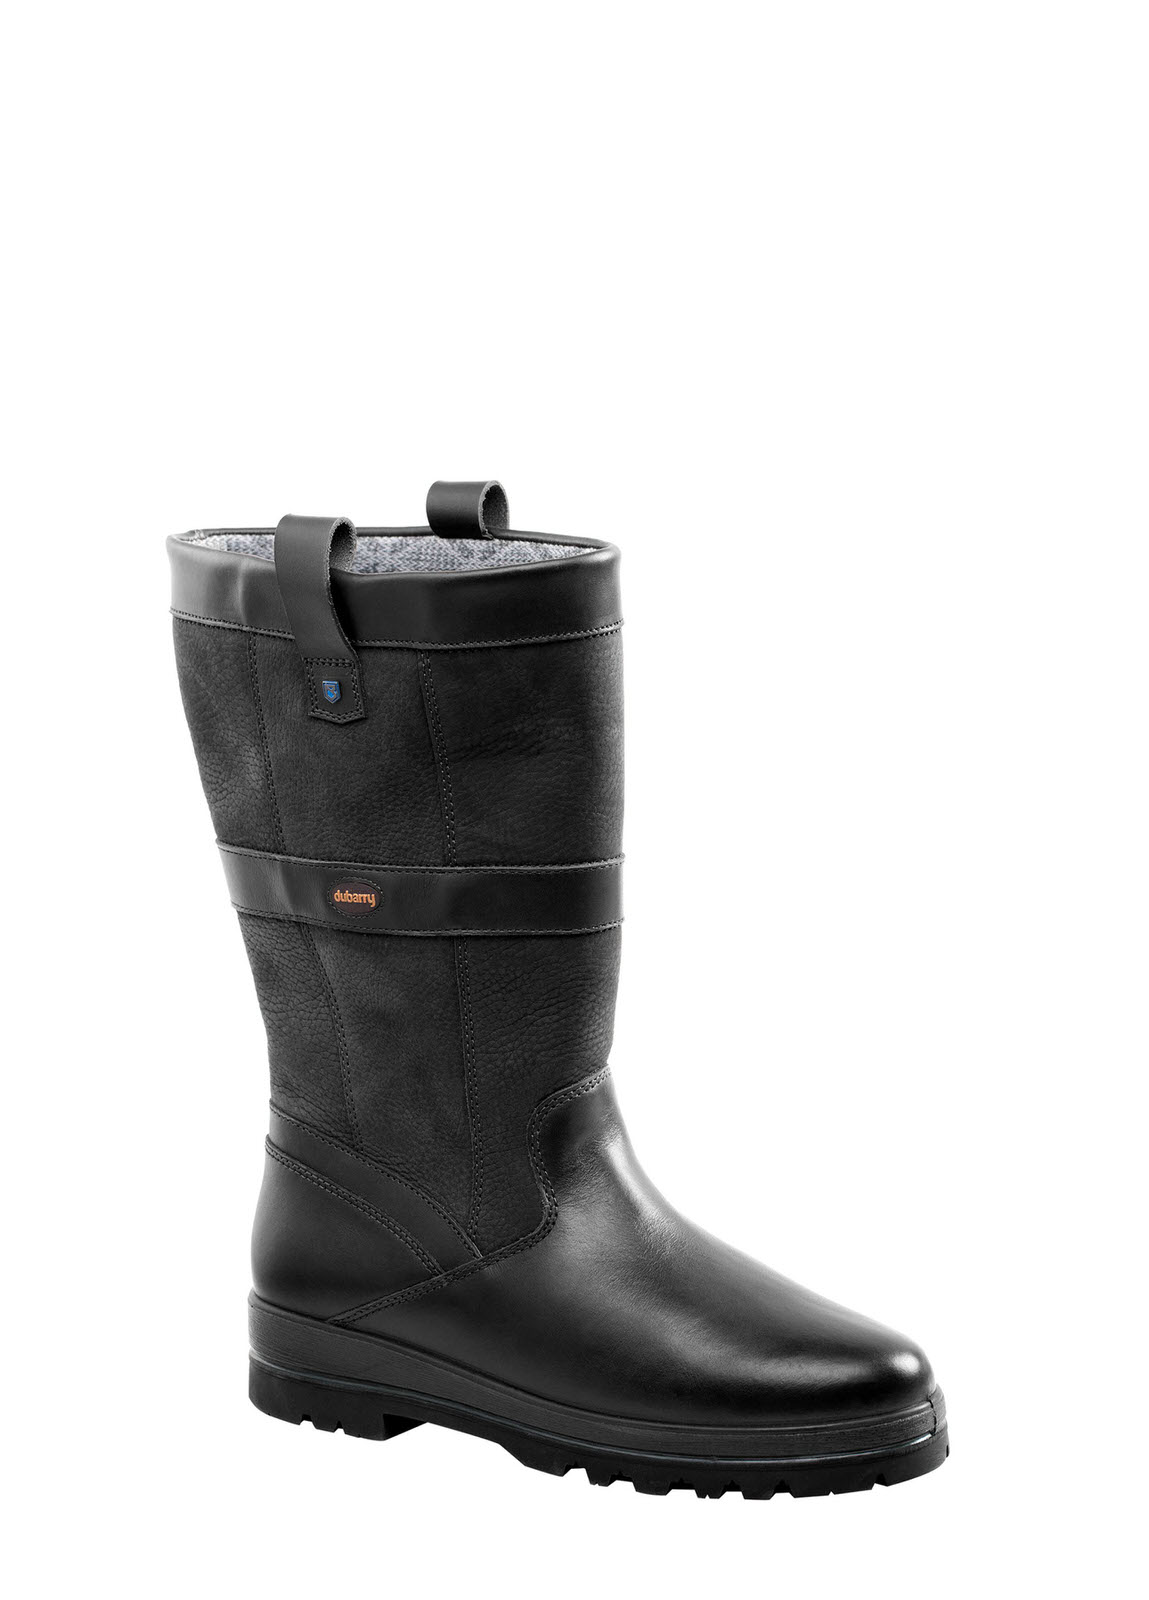 Meath Black Country Boots | Dubarry EU